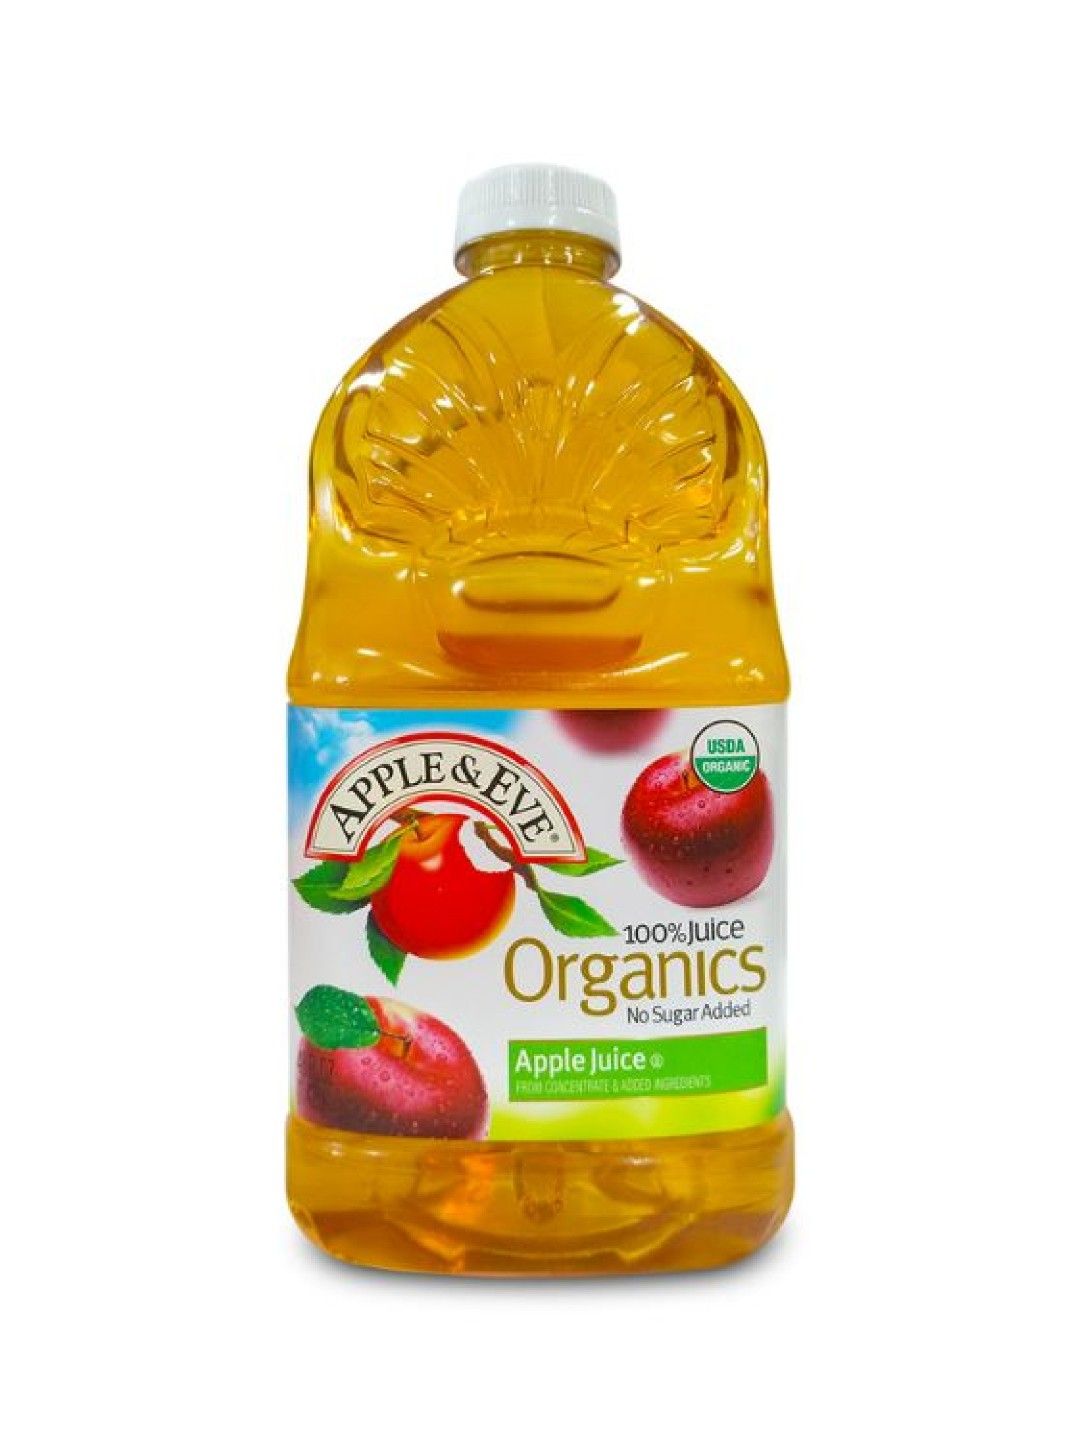 Apple & Eve Organic Apple Juice 48oz / 1.42L (No Sugar Added)